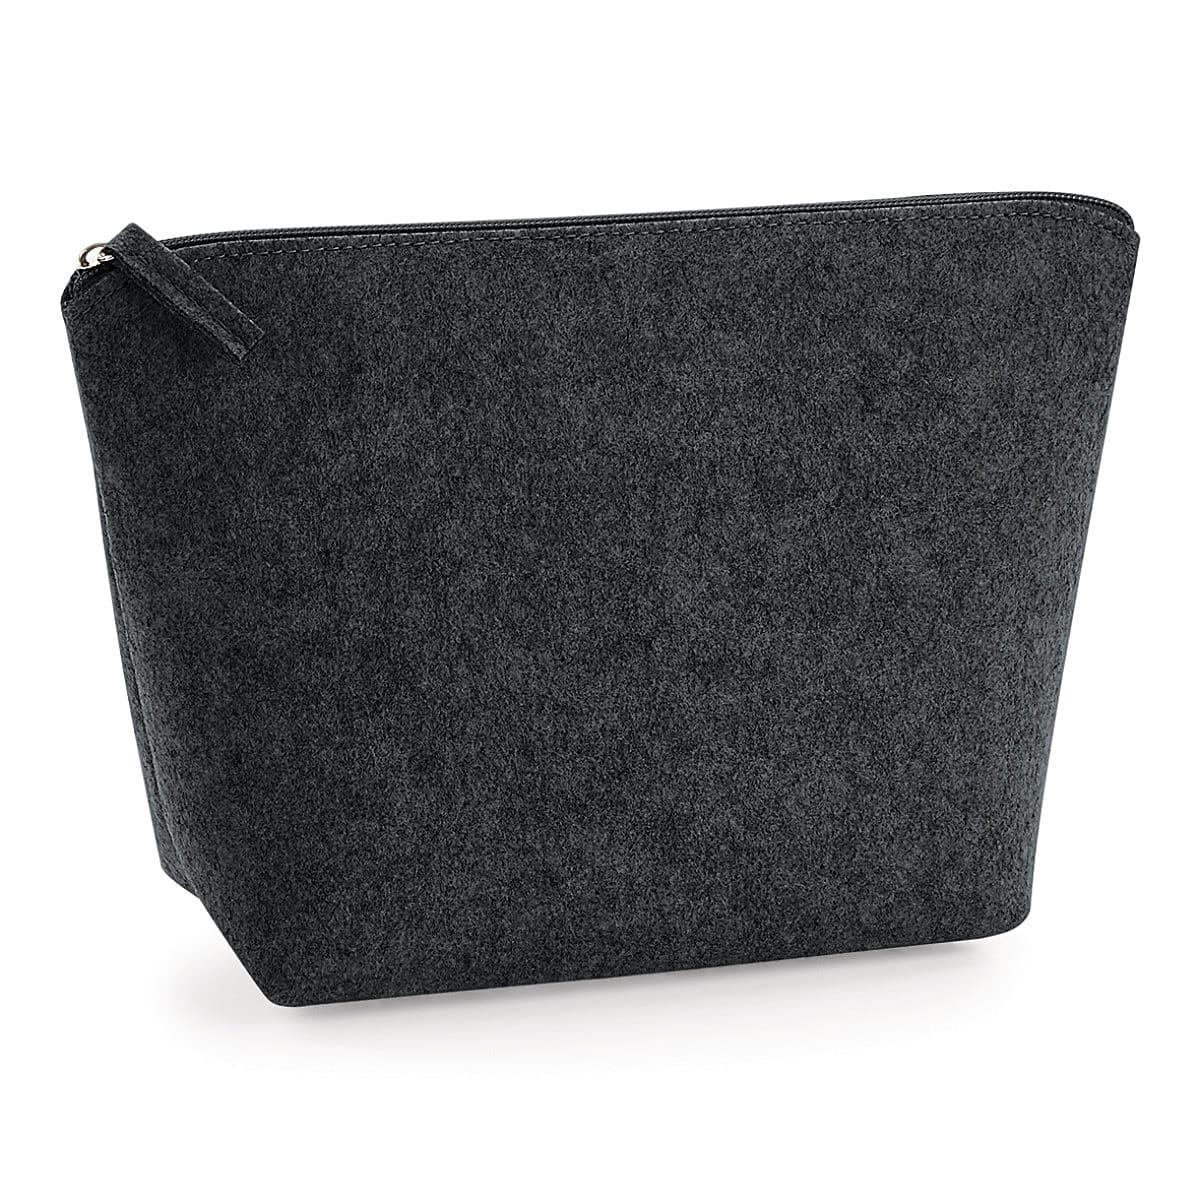 Bagbase Felt Accessory Bag in Charcoal Melange (Product Code: BG724)